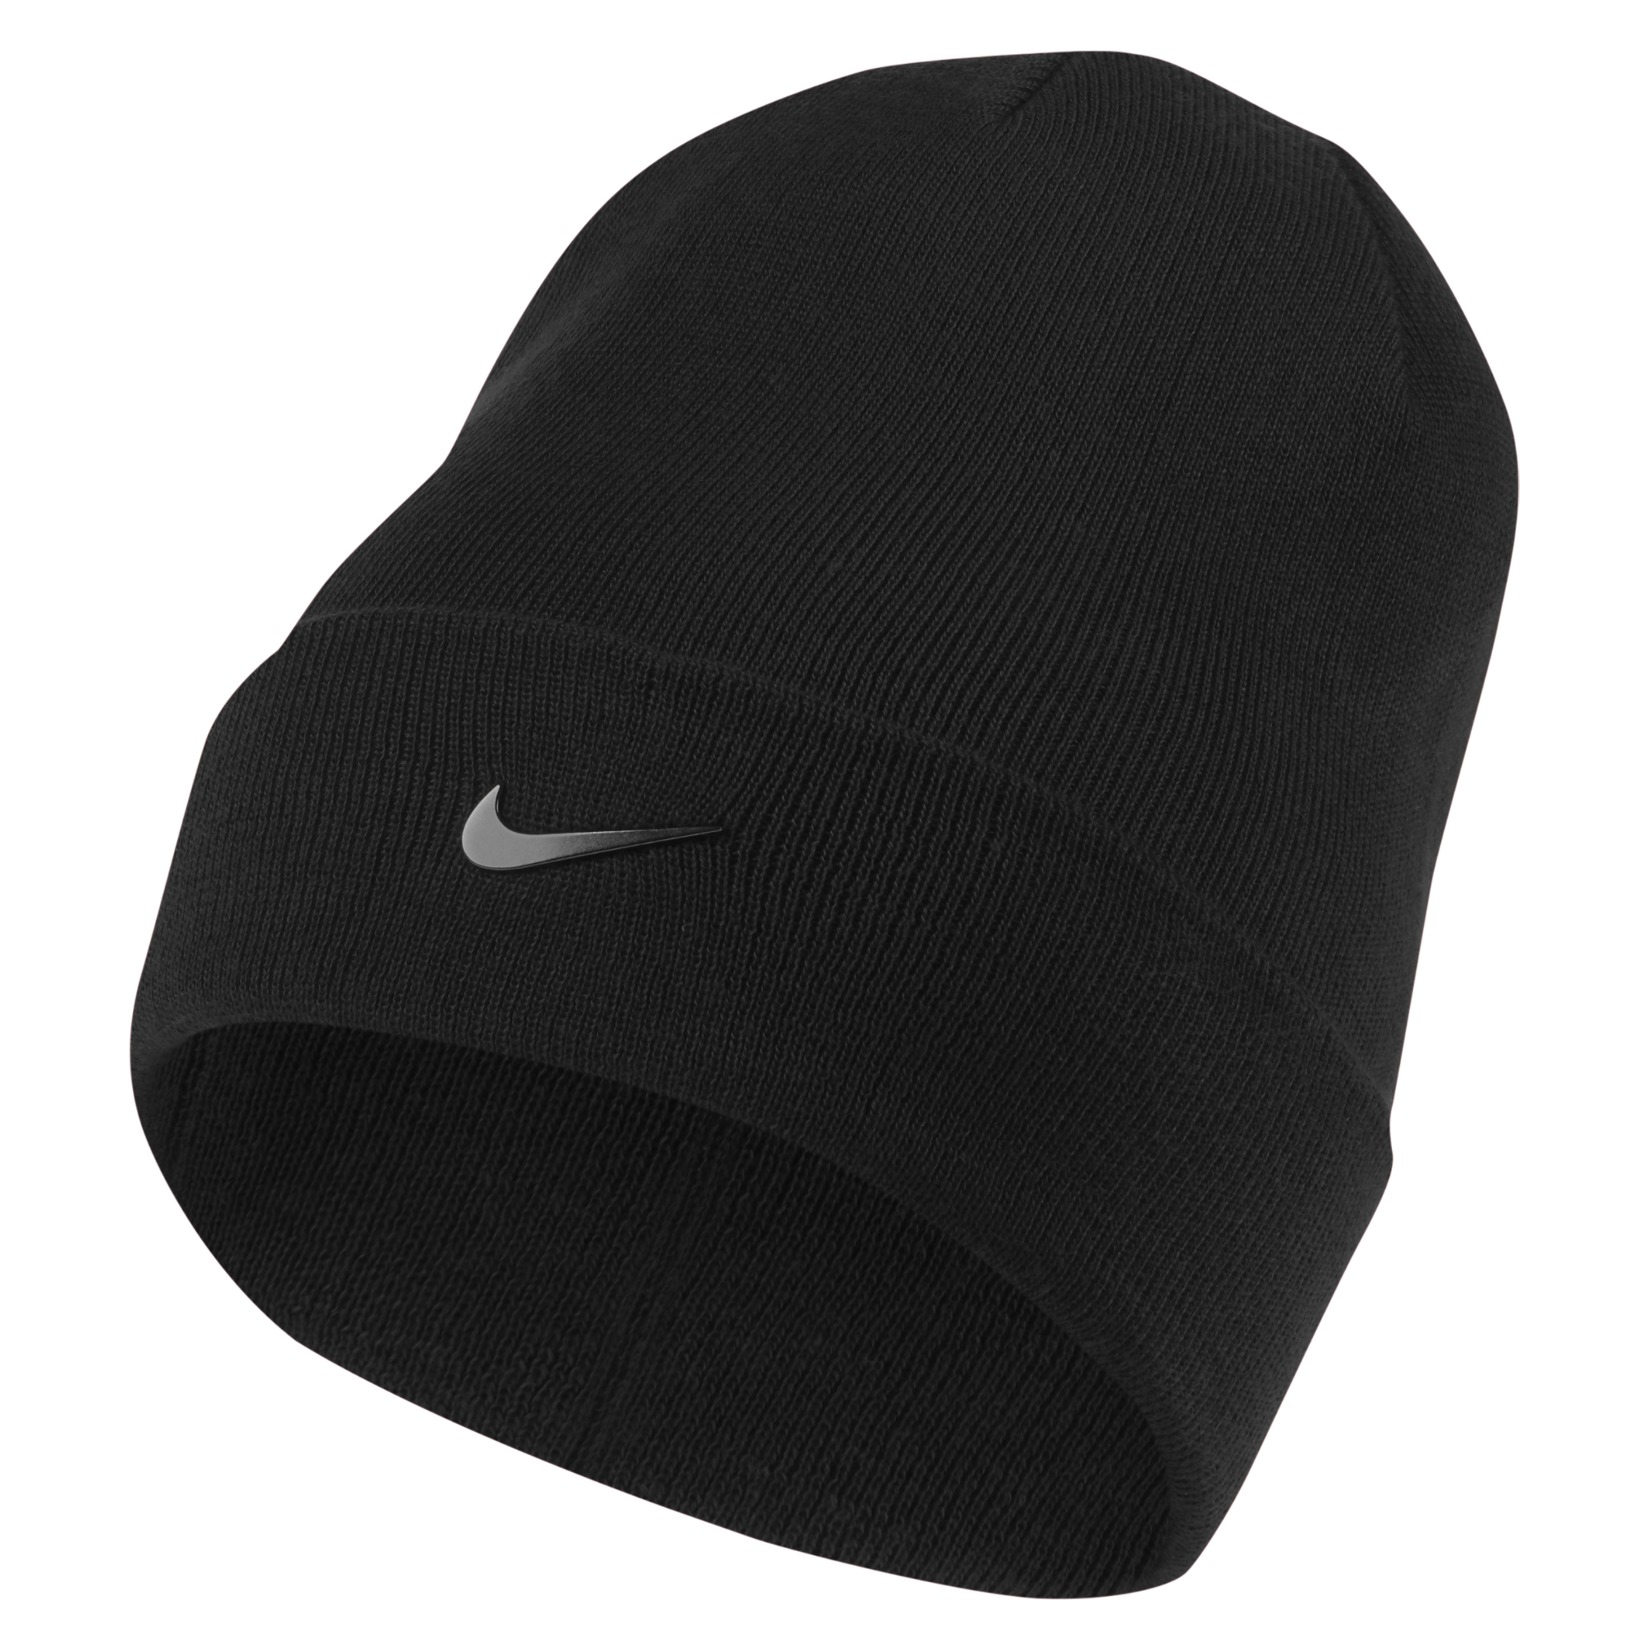 Nike Sportswear beanie - Kitlocker.com